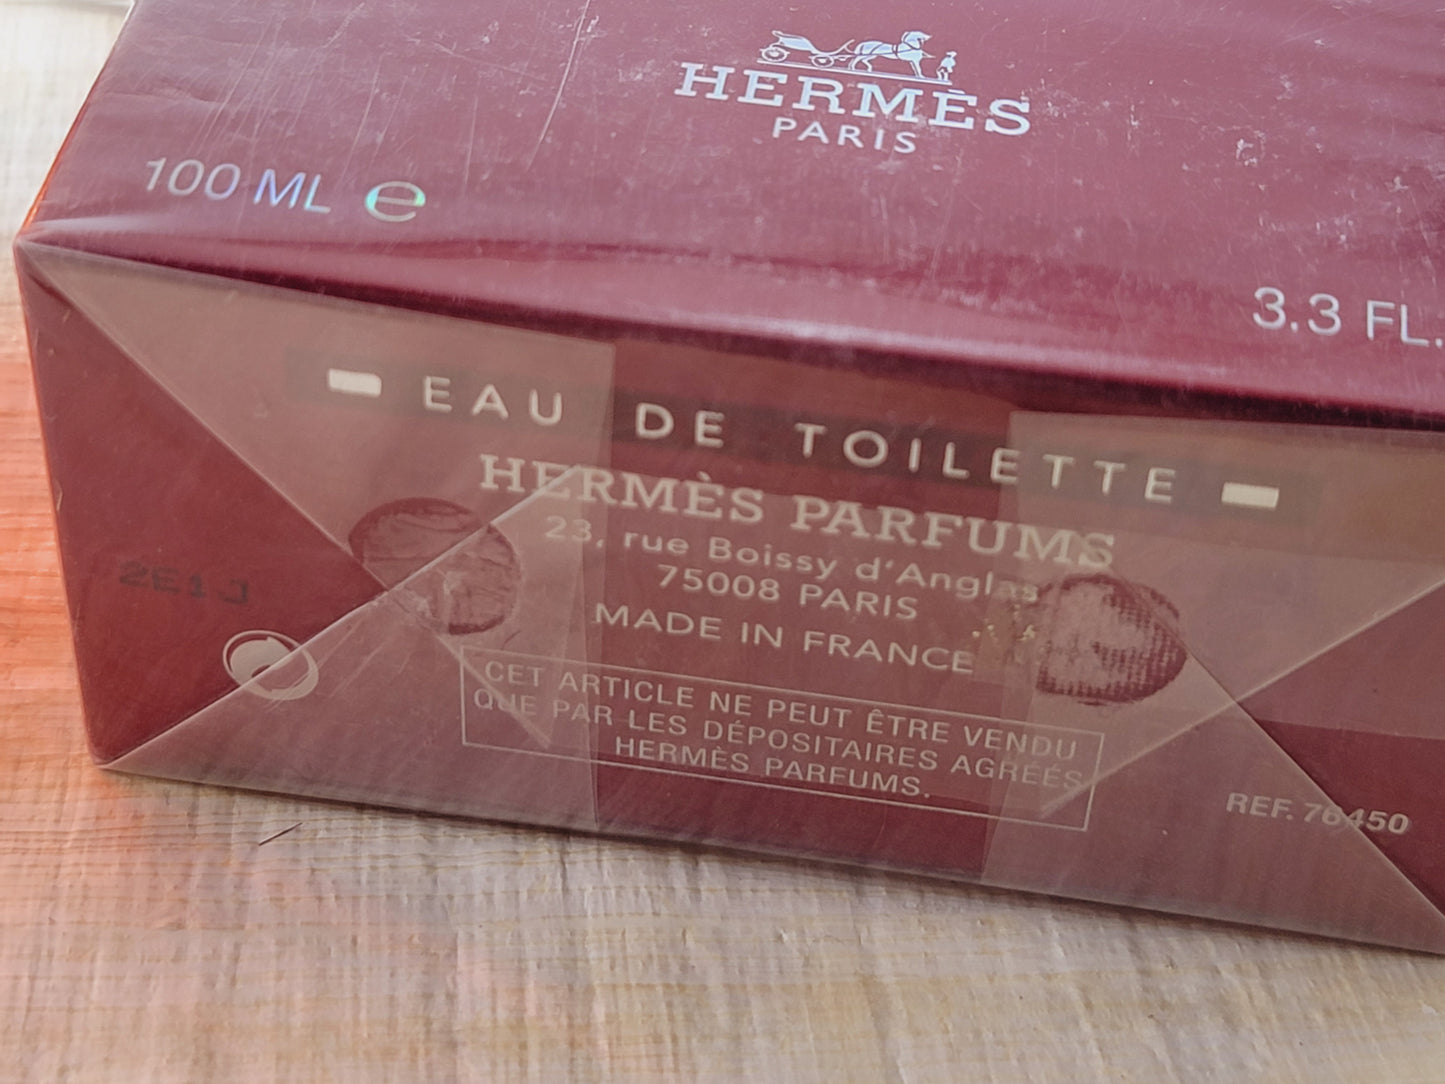 Rouge Hermes Eau Delicate Hermès for women EDT Spray 100 ml 3.4 oz Or 50 ml 1.7 oz, Vintage, Sealed